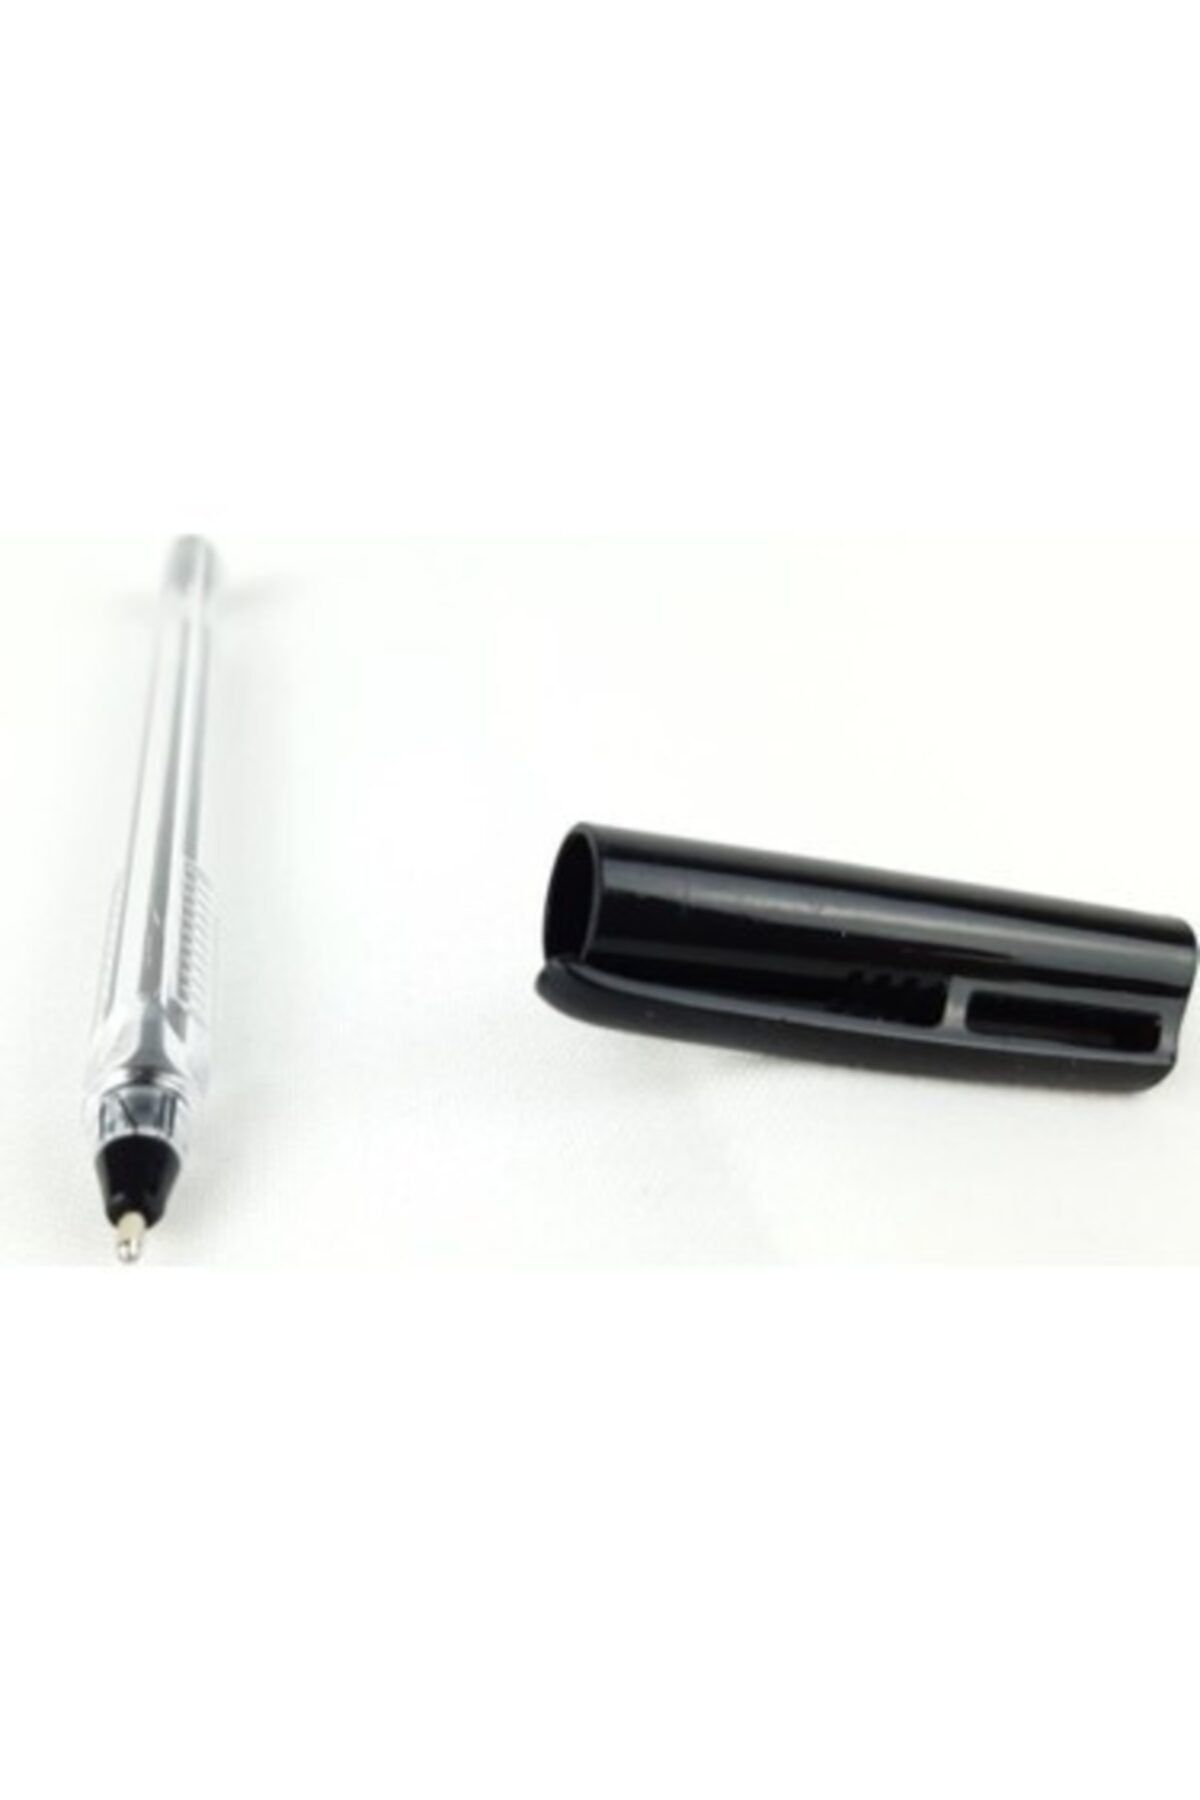 Pensan Tükenmez Kalem Üçgen Siyah 50 Li Tr-23